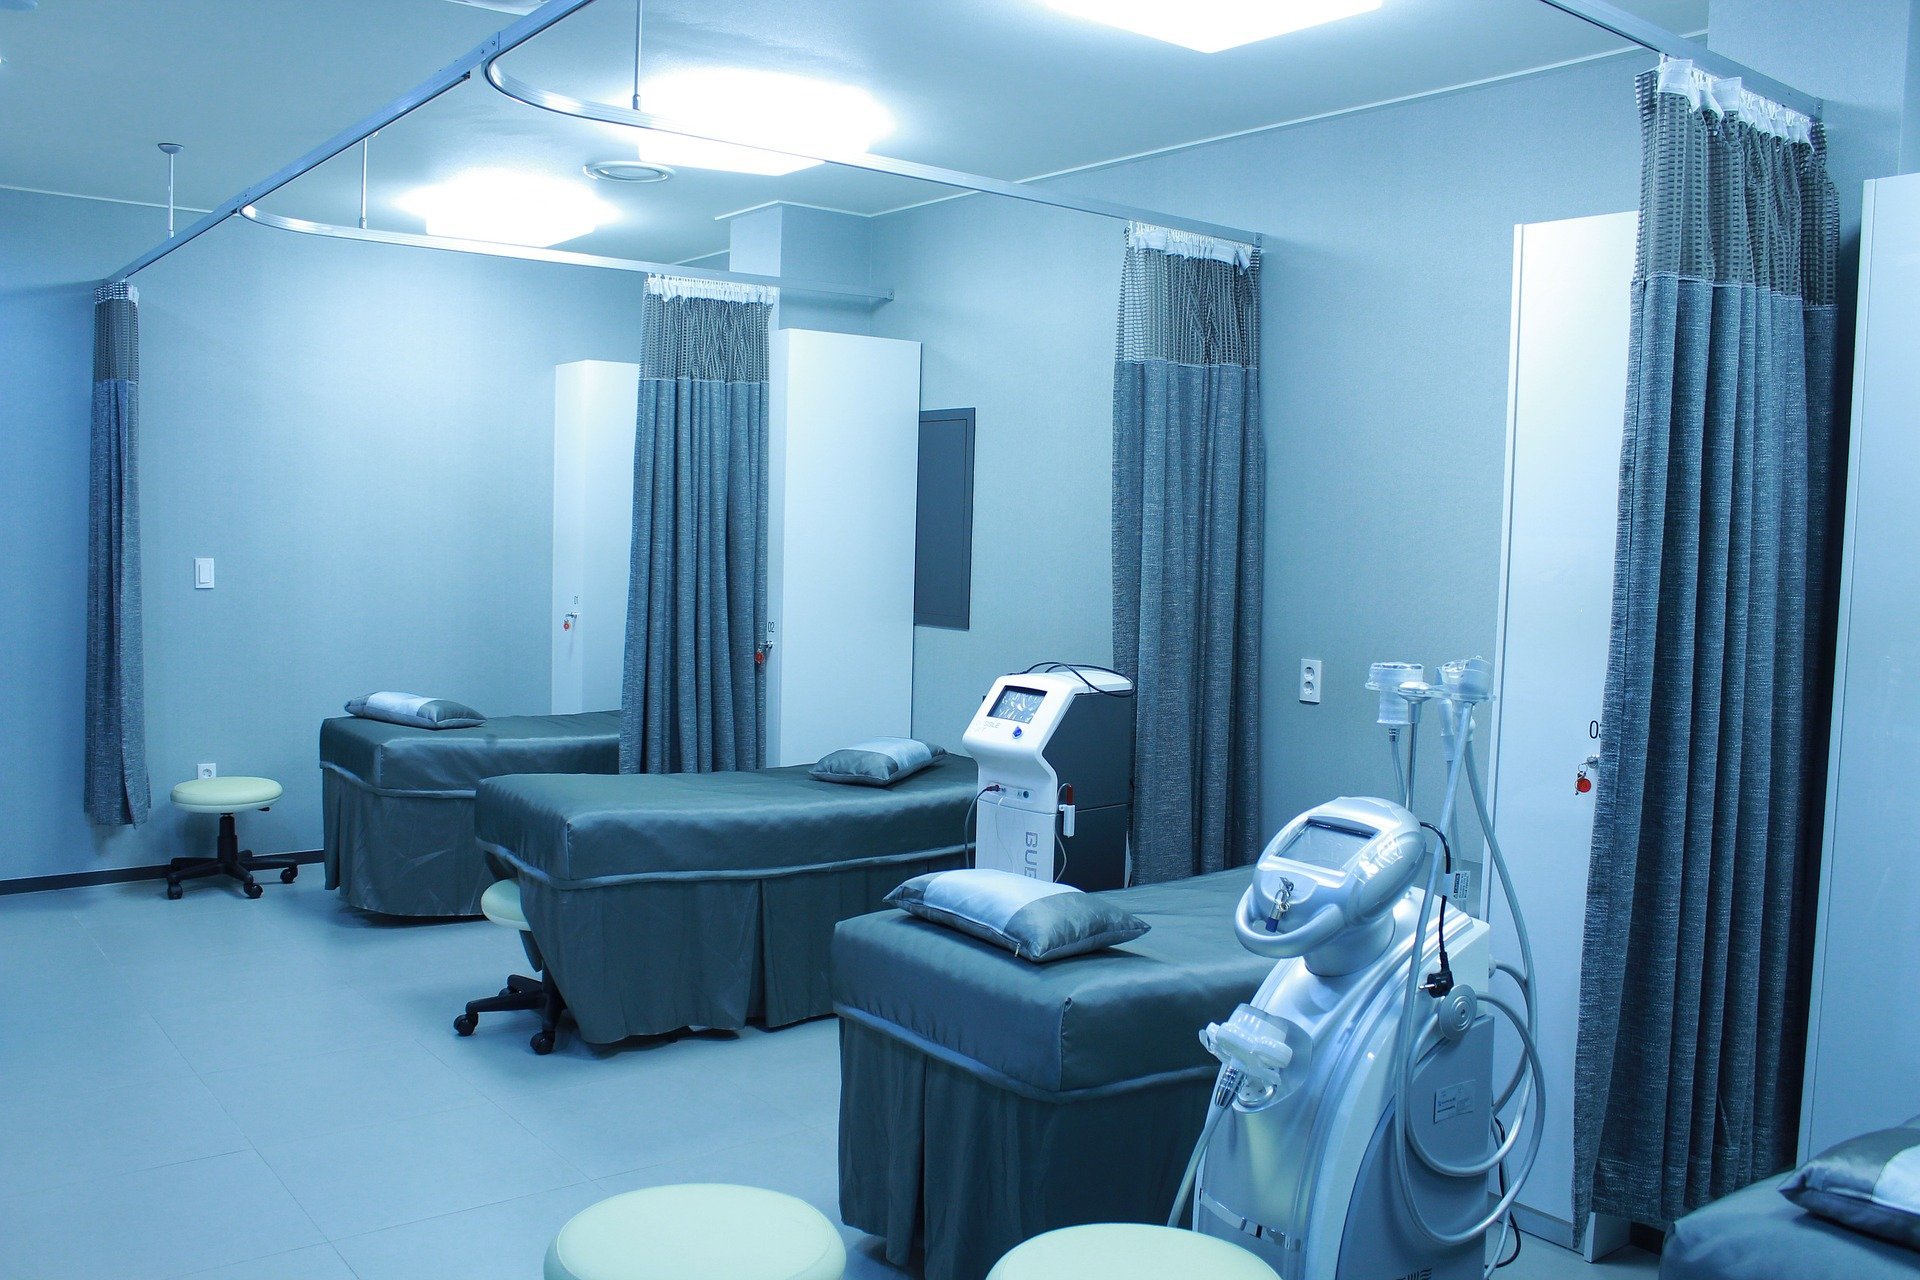 Hospital ward with beds | Source: Pixabay